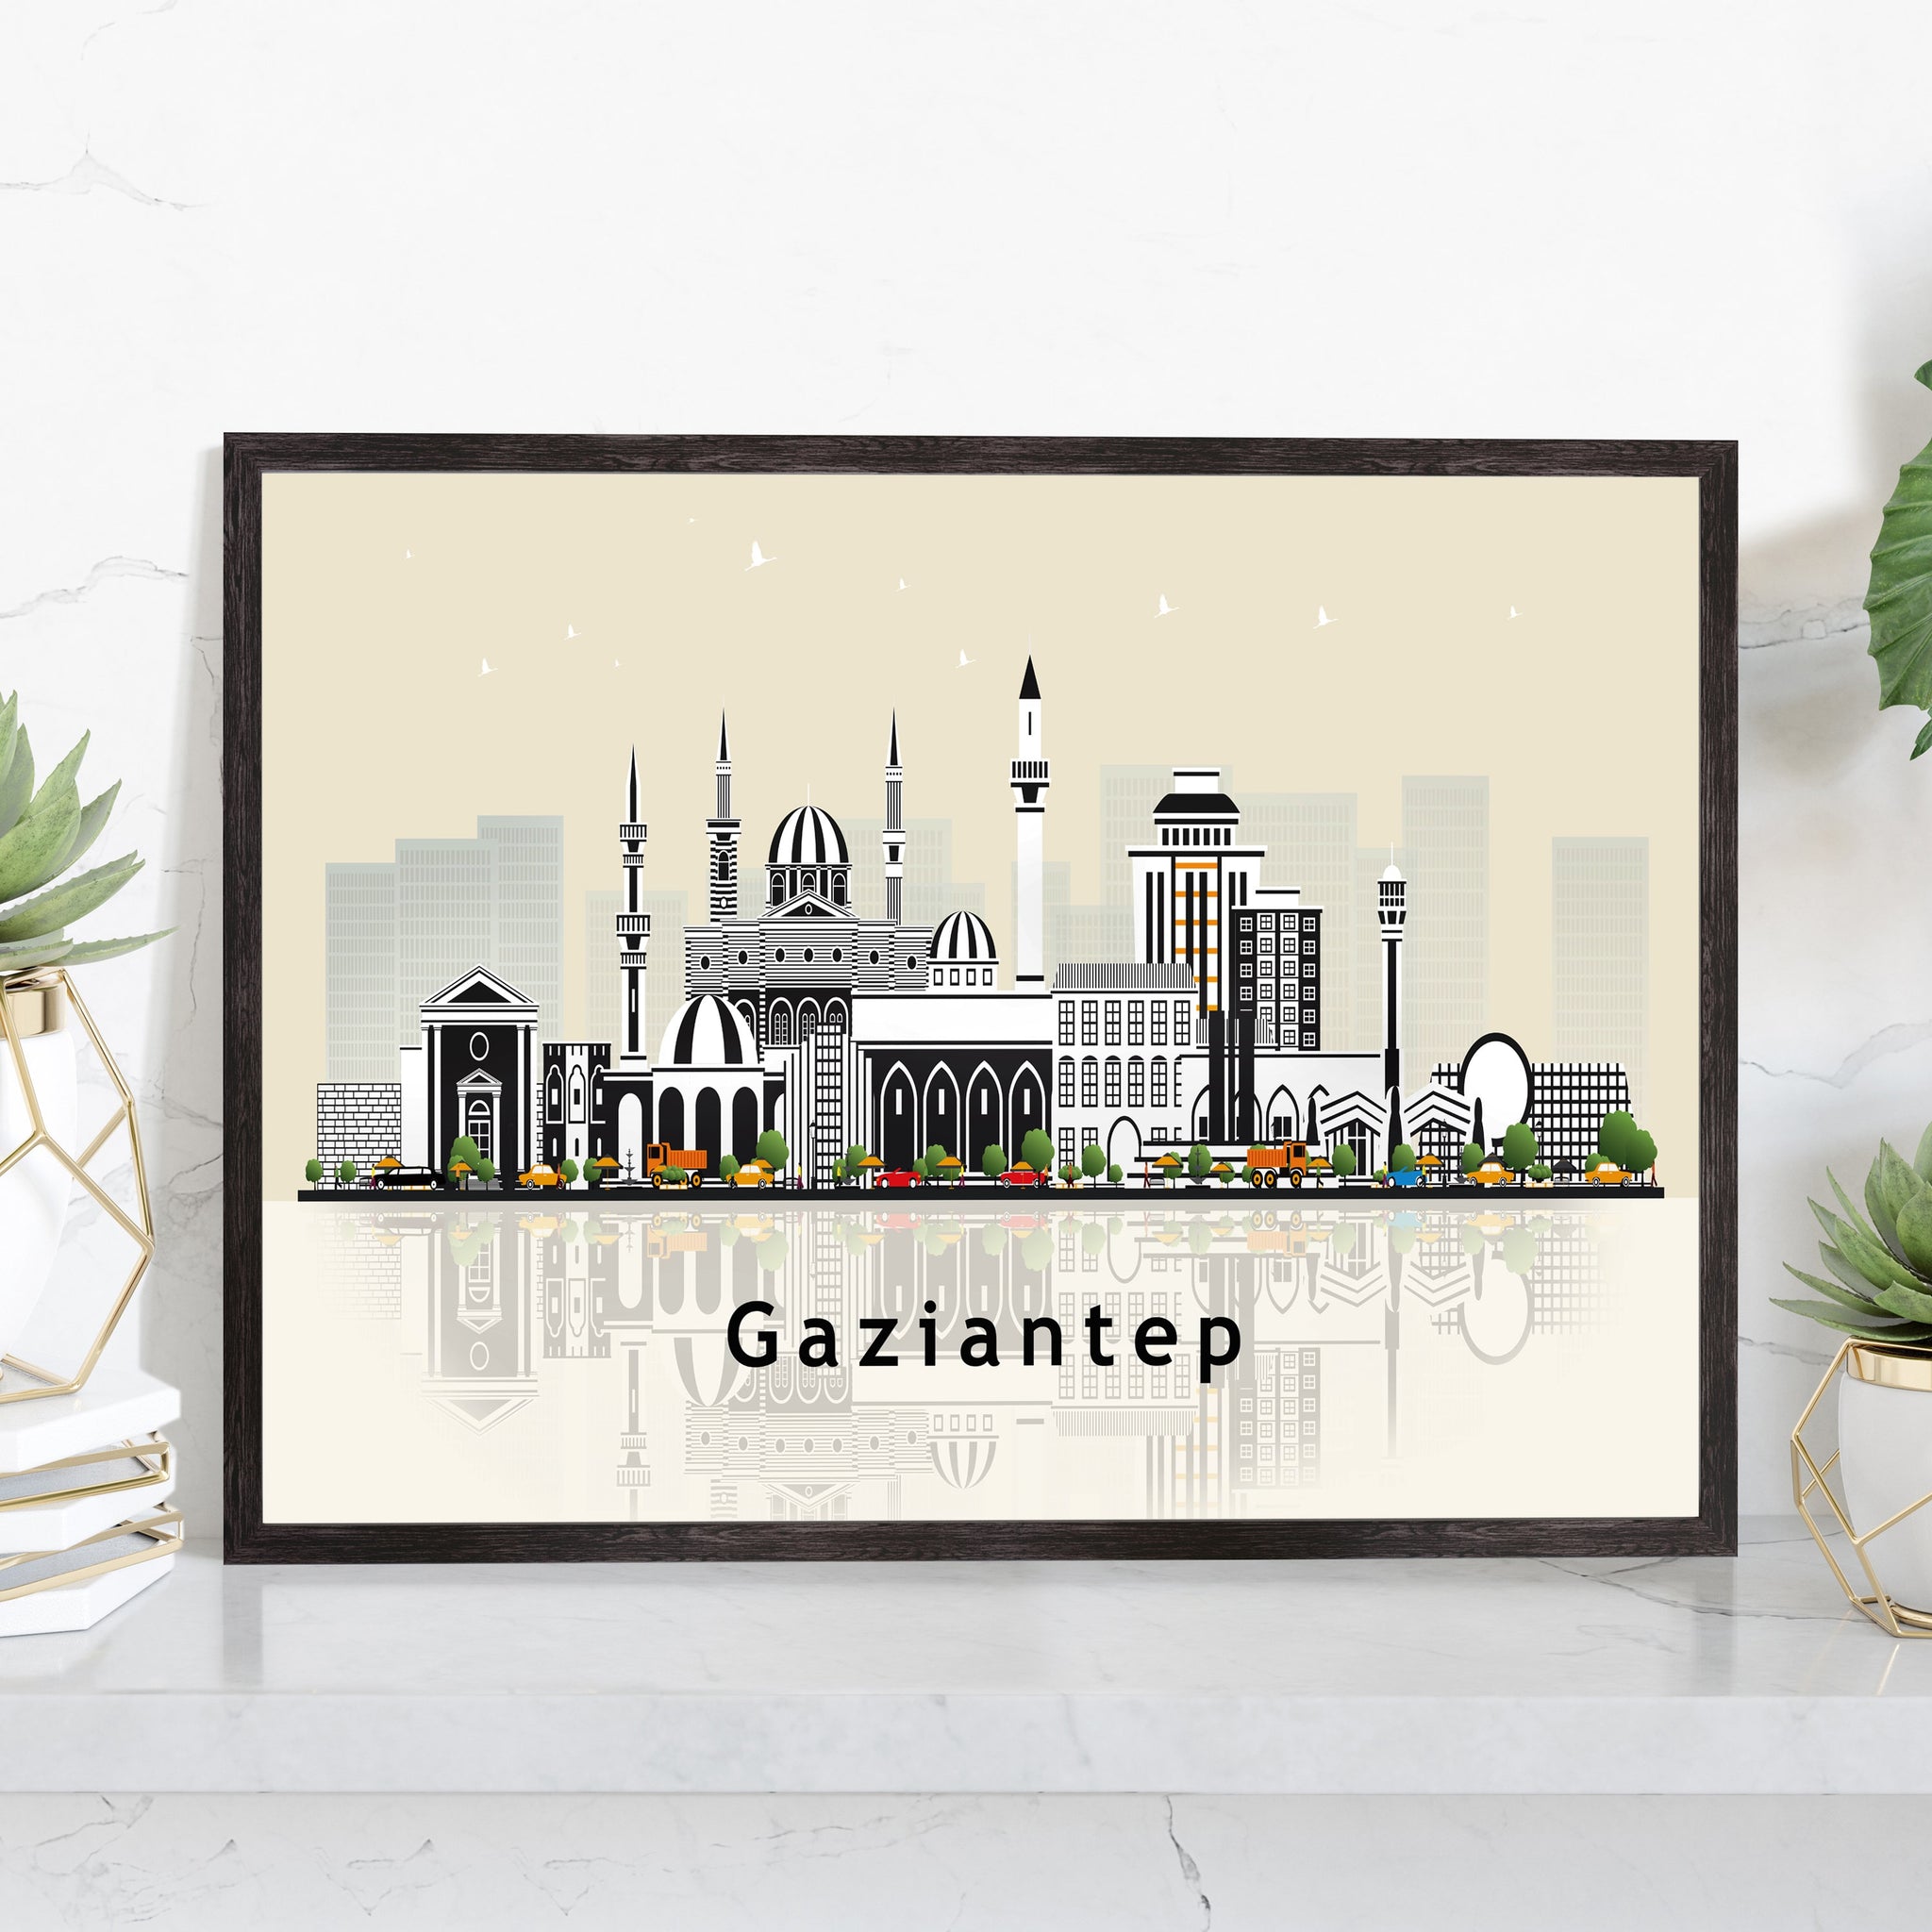 GAZIANTEP TURKEY Illustration skyline poster, Modern skyline cityscape poster print, Gaziantep landmark map poster, Home wall decoration